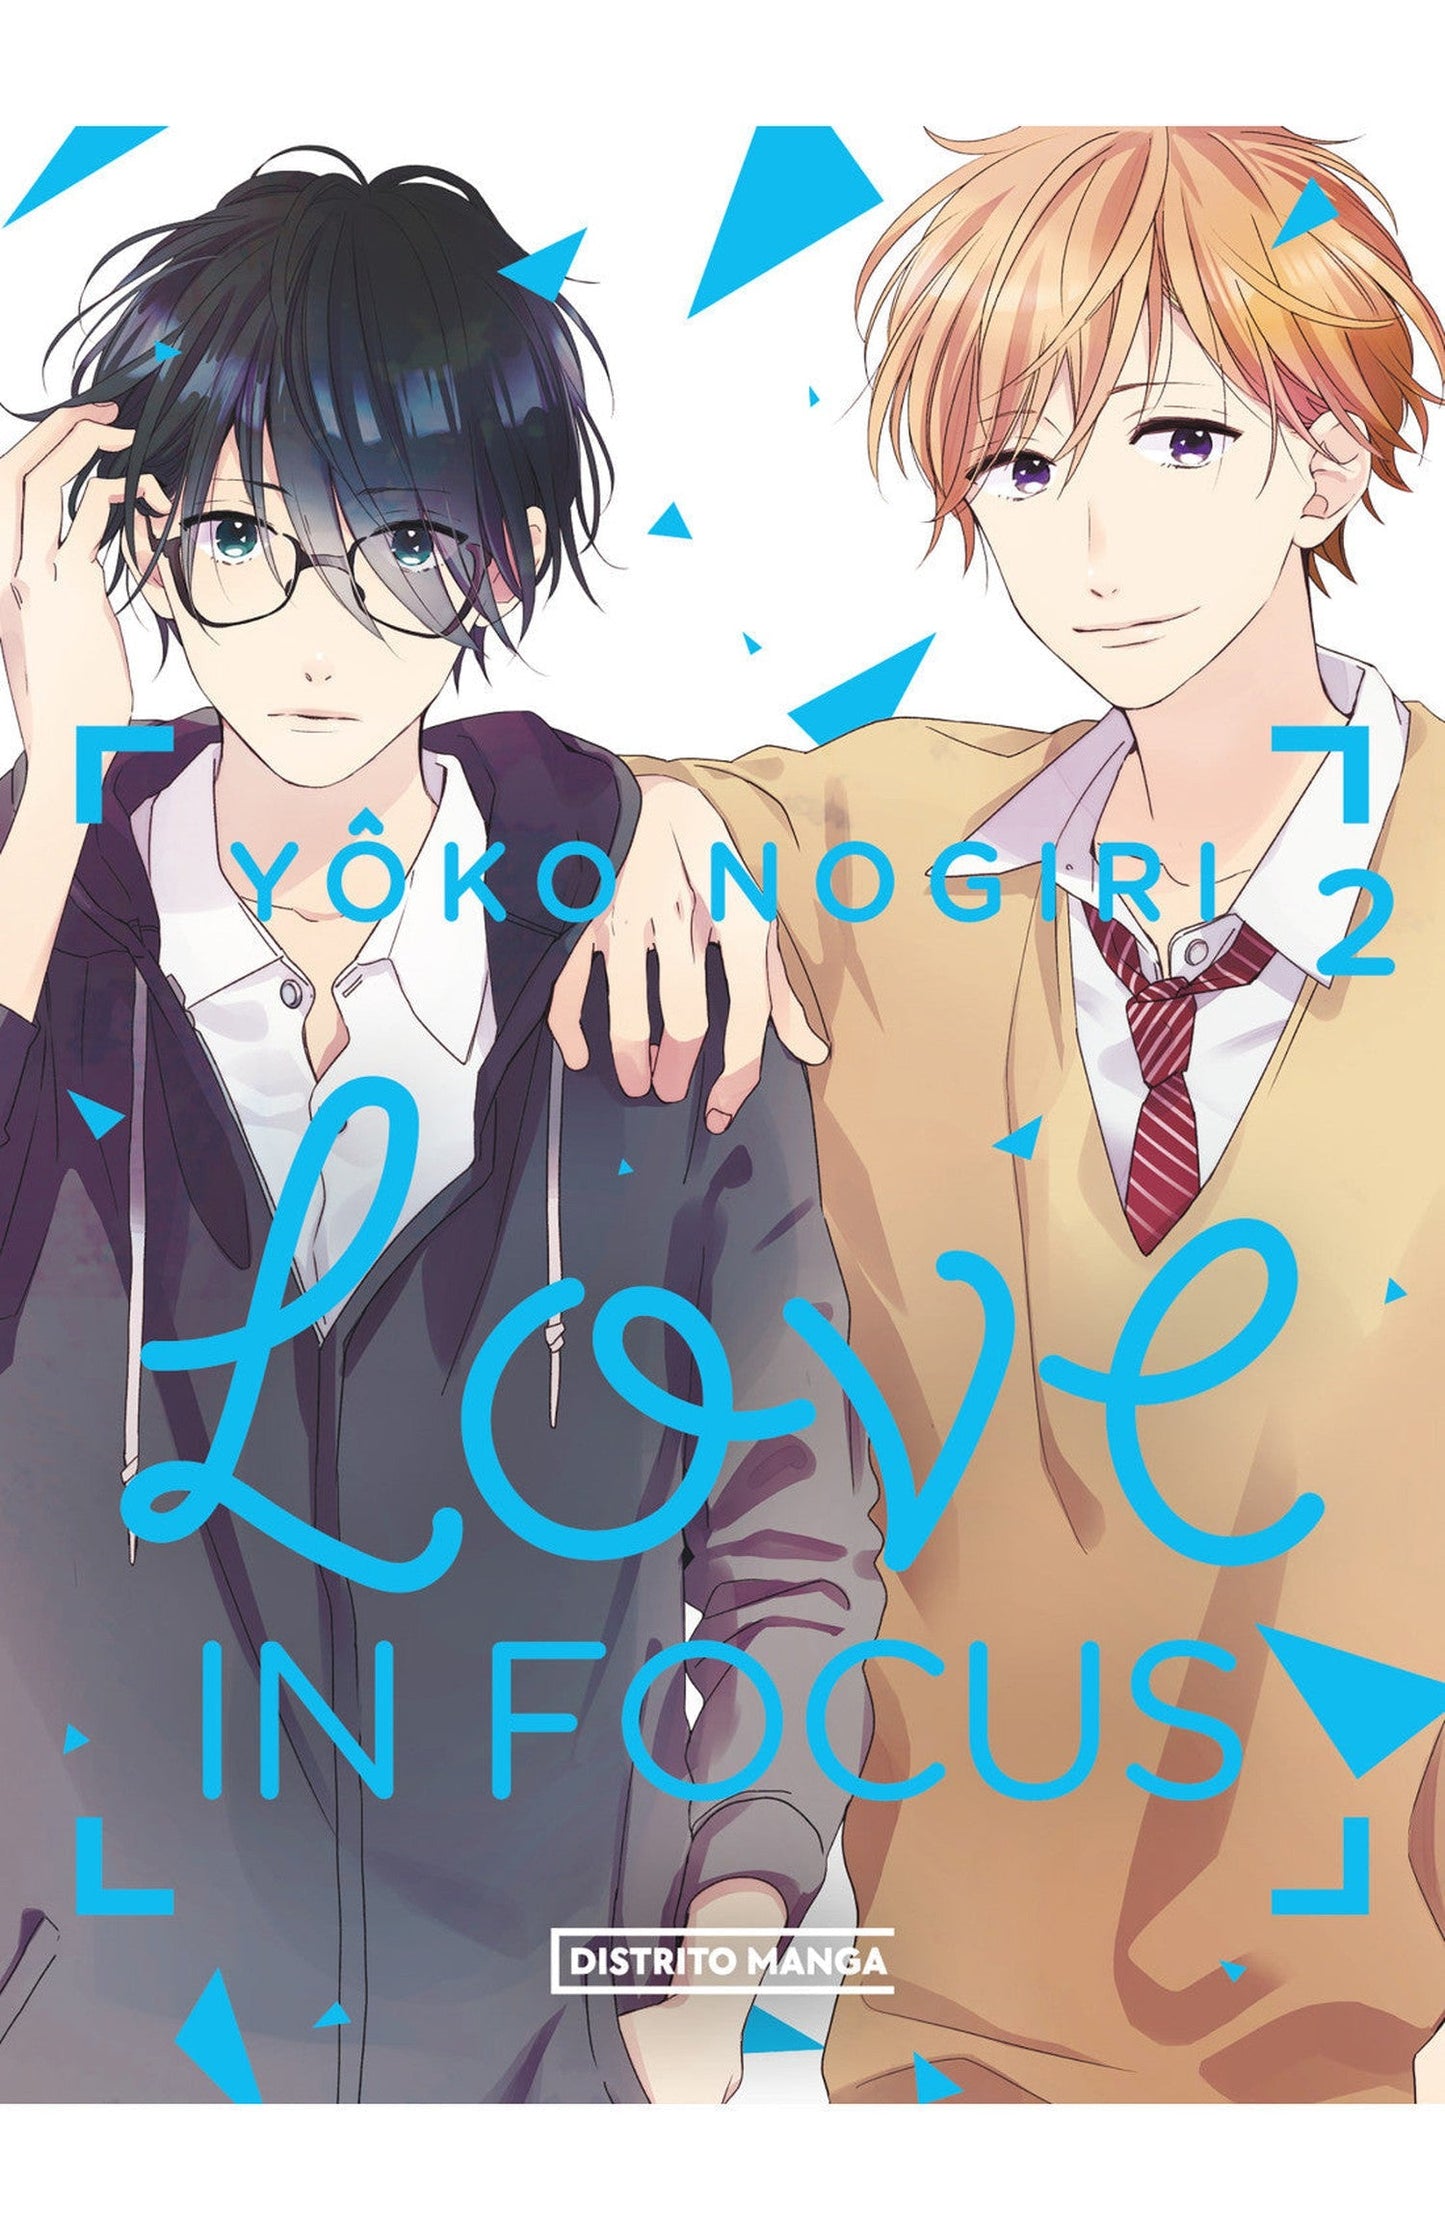 Love in Focus 2 Distrito Manga ENcuadrocomics